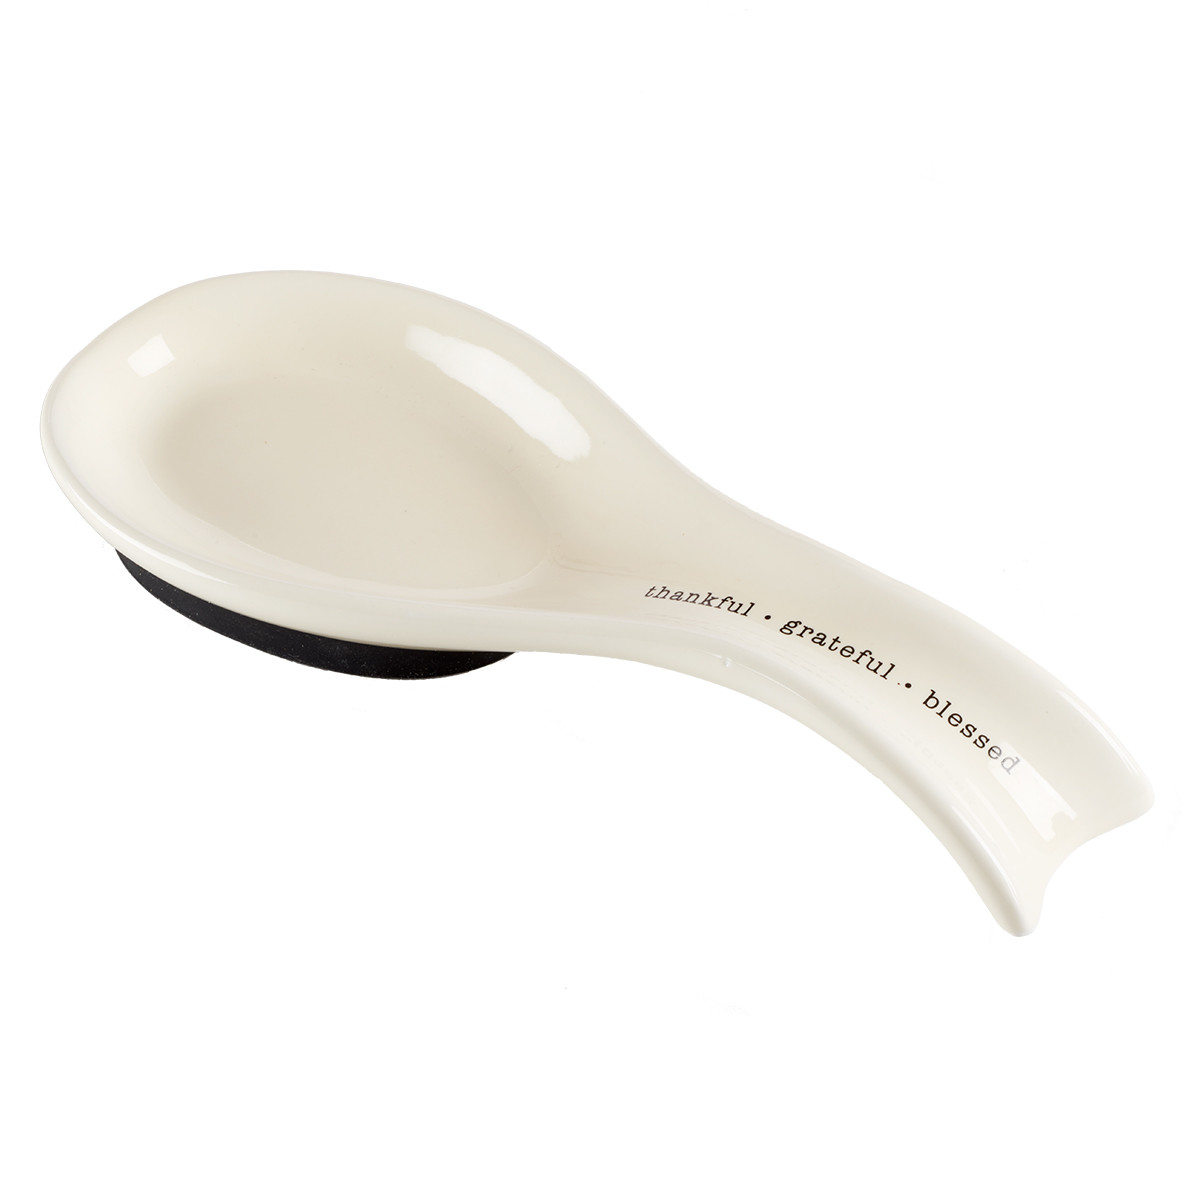 Le Creuset Flower Spoon Rest | Stoneware White